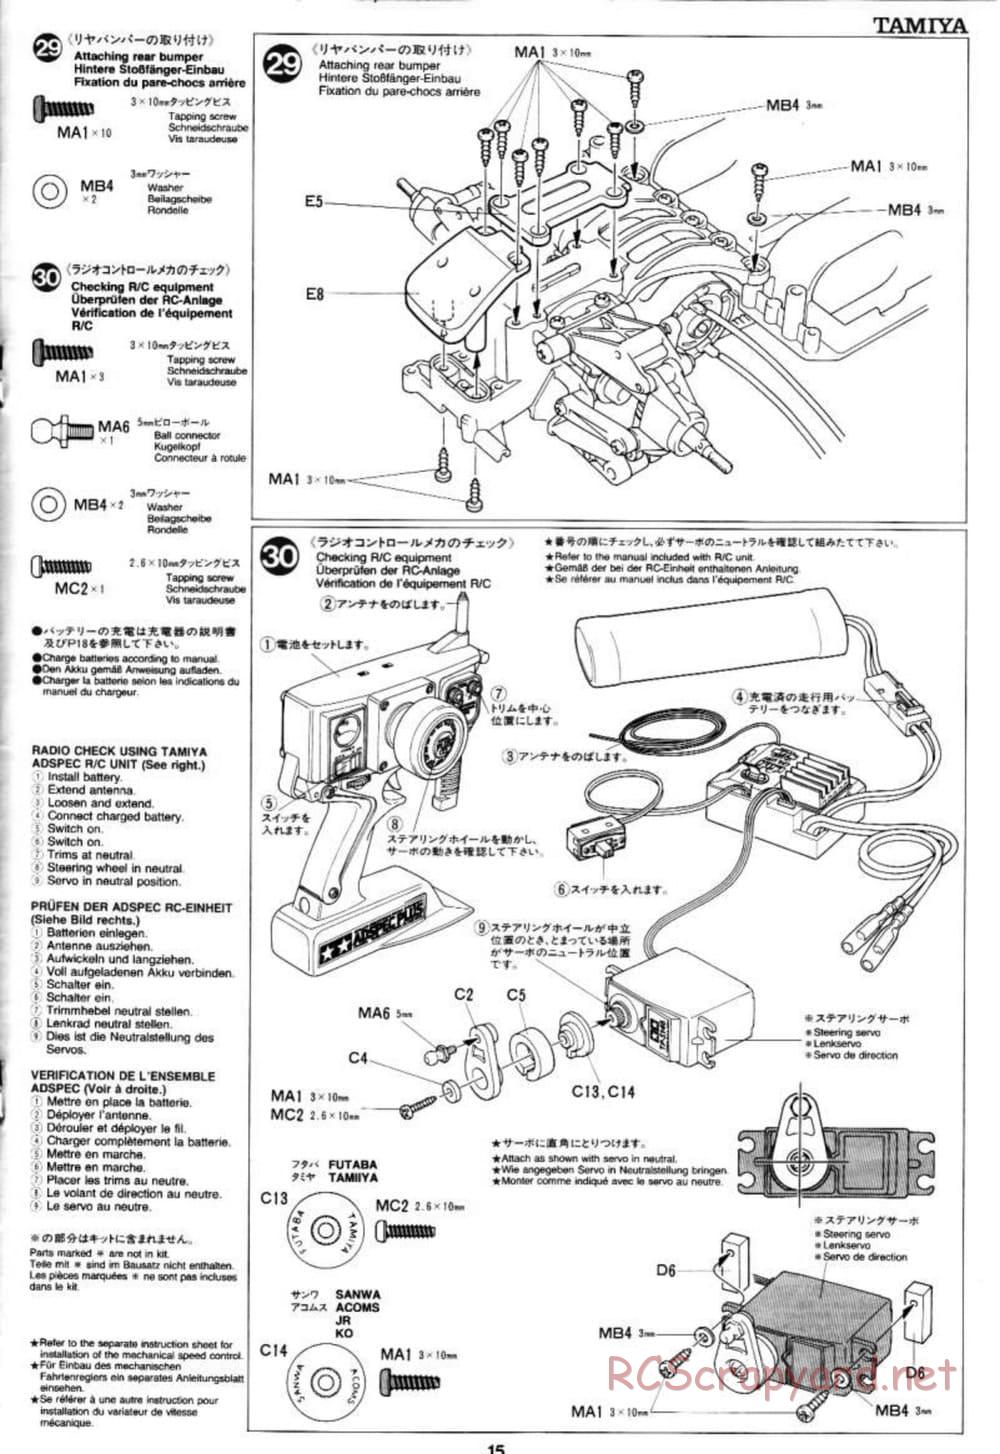 Tamiya - PIAA Porsche 911 - TA-03RS Chassis - Manual - Page 15